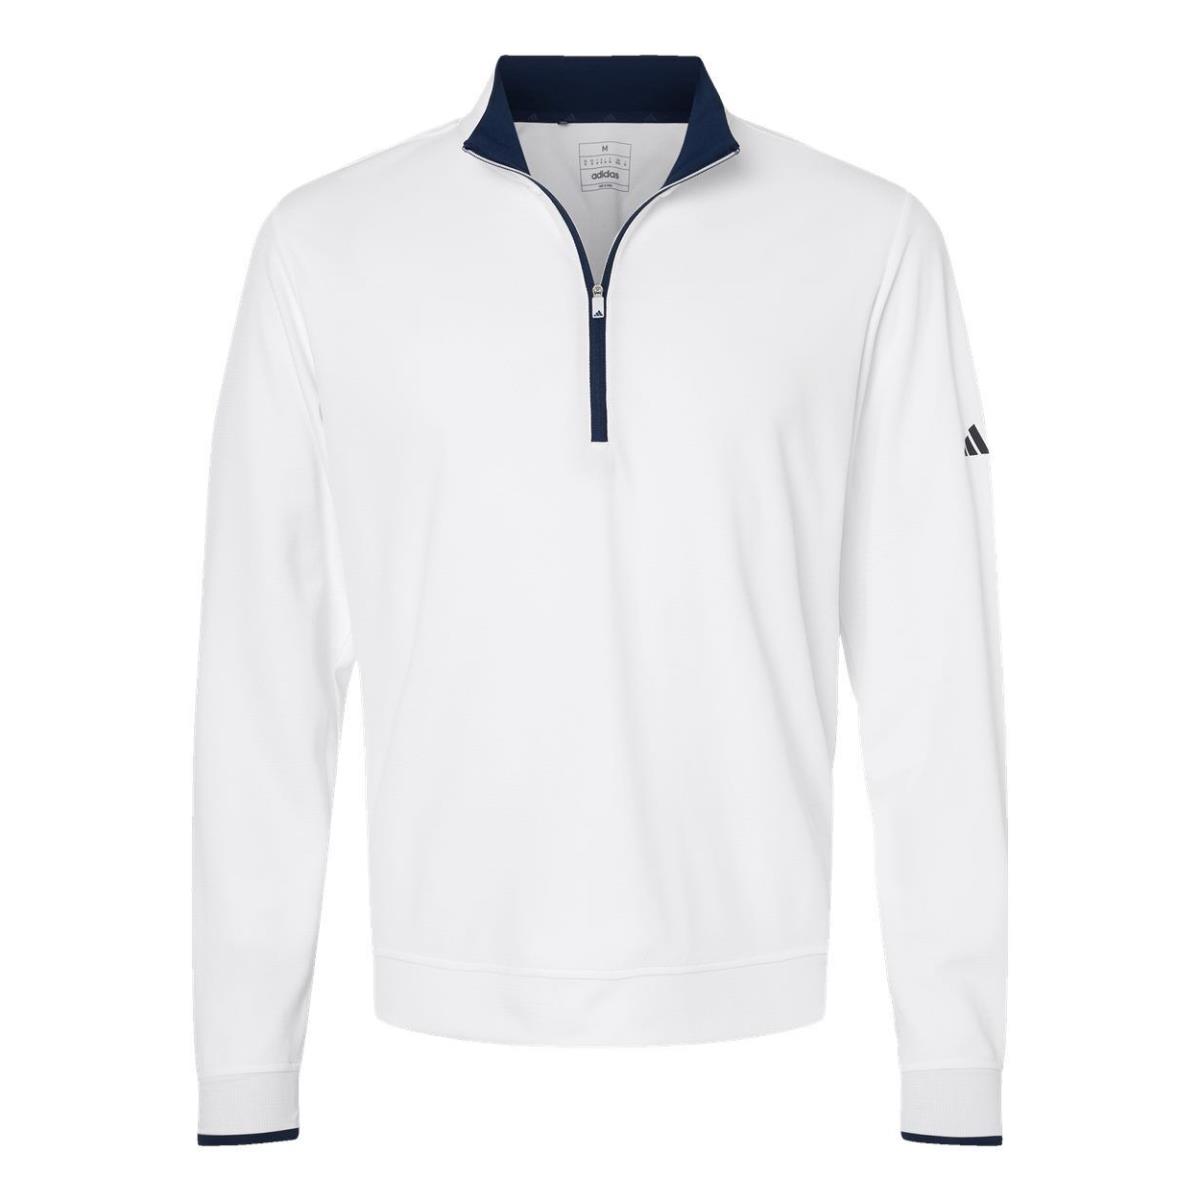 Adidas Golf Men`s S-2XL Lightweight Quarter-zip Pullover Drifit Athletic Jacket White/Navy